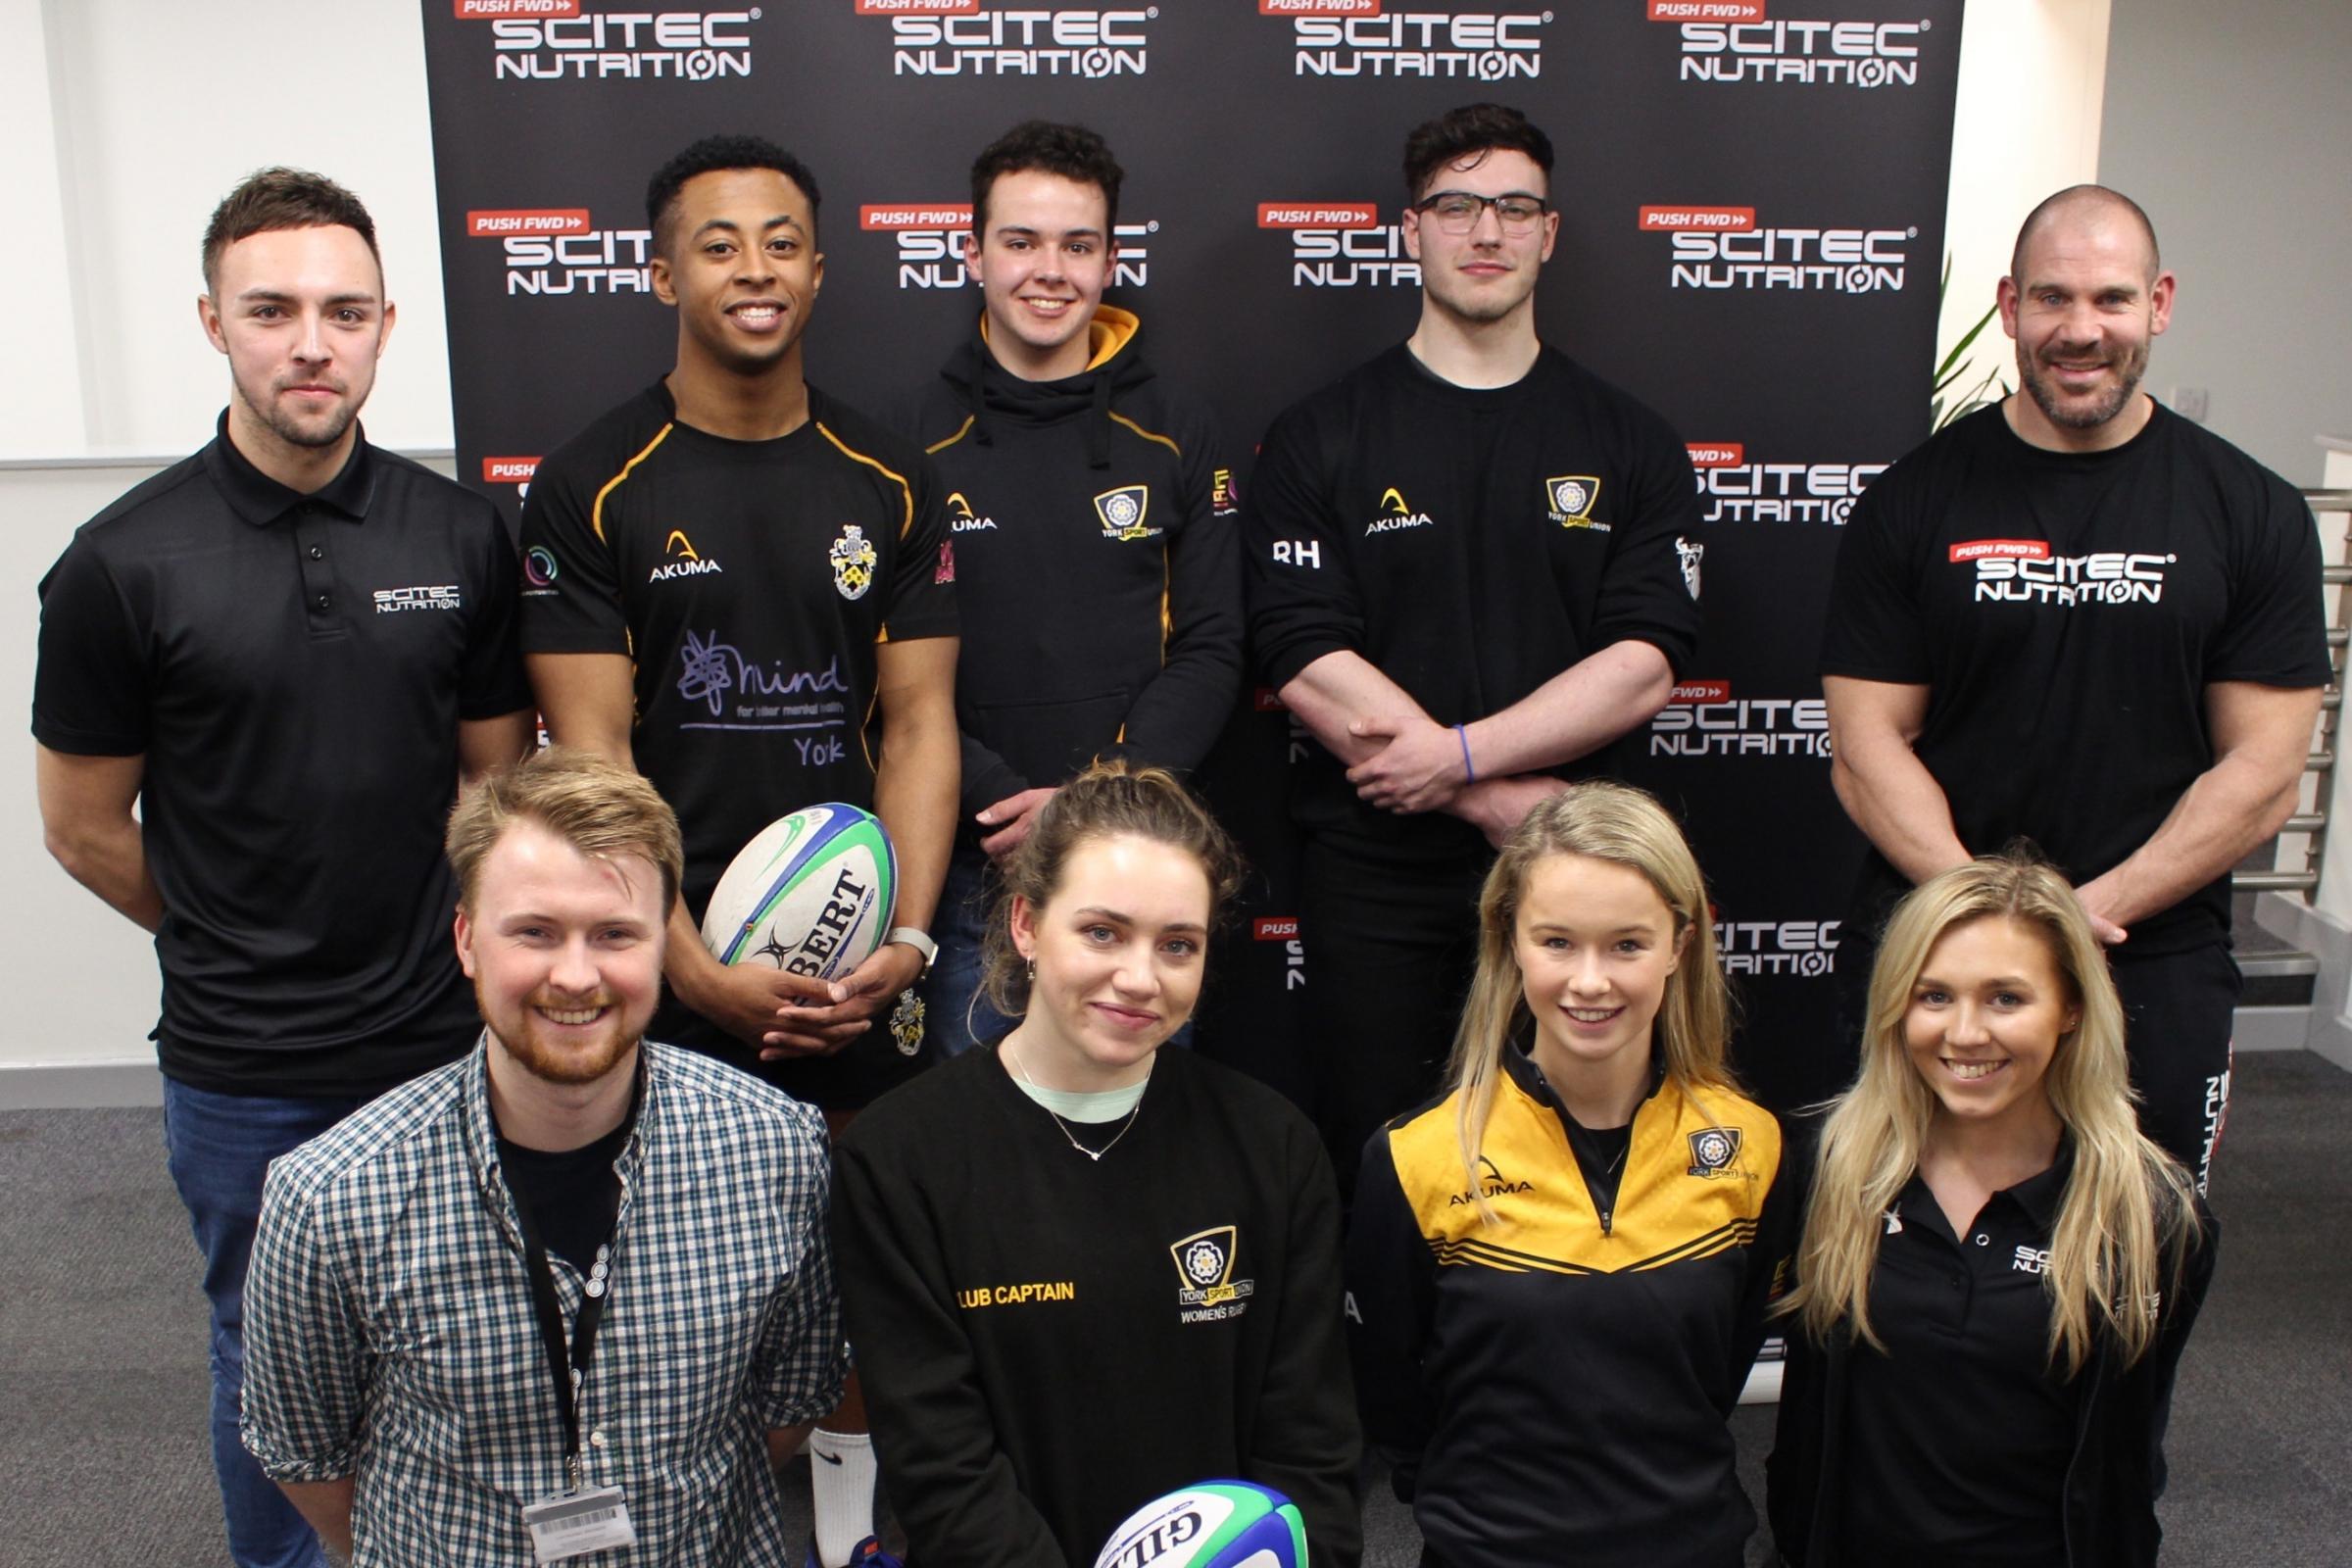 Sports nutrition firm backs York university team players